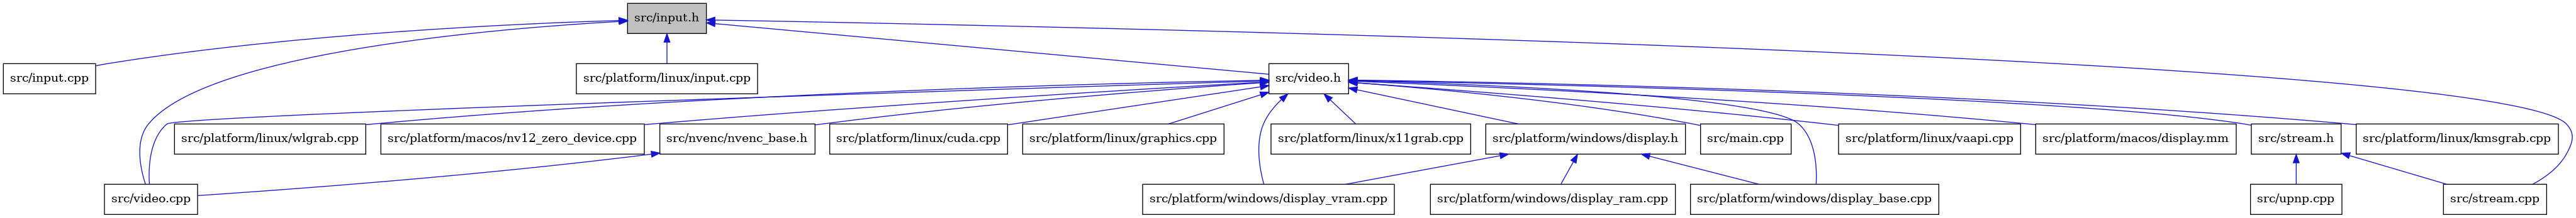 digraph {
    graph [bgcolor="#00000000"]
    node [shape=rectangle style=filled fillcolor="#FFFFFF" font=Helvetica padding=2]
    edge [color="#1414CE"]
    "12" [label="src/platform/linux/vaapi.cpp" tooltip="src/platform/linux/vaapi.cpp"]
    "15" [label="src/platform/macos/display.mm" tooltip="src/platform/macos/display.mm"]
    "11" [label="src/platform/linux/kmsgrab.cpp" tooltip="src/platform/linux/kmsgrab.cpp"]
    "13" [label="src/platform/linux/wlgrab.cpp" tooltip="src/platform/linux/wlgrab.cpp"]
    "2" [label="src/input.cpp" tooltip="src/input.cpp"]
    "8" [label="src/video.cpp" tooltip="src/video.cpp"]
    "16" [label="src/platform/macos/nv12_zero_device.cpp" tooltip="src/platform/macos/nv12_zero_device.cpp"]
    "1" [label="src/input.h" tooltip="src/input.h" fillcolor="#BFBFBF"]
    "7" [label="src/nvenc/nvenc_base.h" tooltip="src/nvenc/nvenc_base.h"]
    "22" [label="src/upnp.cpp" tooltip="src/upnp.cpp"]
    "3" [label="src/platform/linux/input.cpp" tooltip="src/platform/linux/input.cpp"]
    "10" [label="src/platform/linux/cuda.cpp" tooltip="src/platform/linux/cuda.cpp"]
    "5" [label="src/video.h" tooltip="src/video.h"]
    "4" [label="src/stream.cpp" tooltip="src/stream.cpp"]
    "18" [label="src/platform/windows/display_ram.cpp" tooltip="src/platform/windows/display_ram.cpp"]
    "9" [label="src/platform/linux/graphics.cpp" tooltip="src/platform/linux/graphics.cpp"]
    "20" [label="src/platform/windows/display_vram.cpp" tooltip="src/platform/windows/display_vram.cpp"]
    "19" [label="src/platform/windows/display_base.cpp" tooltip="src/platform/windows/display_base.cpp"]
    "14" [label="src/platform/linux/x11grab.cpp" tooltip="src/platform/linux/x11grab.cpp"]
    "21" [label="src/stream.h" tooltip="src/stream.h"]
    "6" [label="src/main.cpp" tooltip="src/main.cpp"]
    "17" [label="src/platform/windows/display.h" tooltip="src/platform/windows/display.h"]
    "1" -> "2" [dir=back tooltip="include"]
    "1" -> "3" [dir=back tooltip="include"]
    "1" -> "4" [dir=back tooltip="include"]
    "1" -> "5" [dir=back tooltip="include"]
    "1" -> "8" [dir=back tooltip="include"]
    "7" -> "8" [dir=back tooltip="include"]
    "5" -> "6" [dir=back tooltip="include"]
    "5" -> "7" [dir=back tooltip="include"]
    "5" -> "9" [dir=back tooltip="include"]
    "5" -> "10" [dir=back tooltip="include"]
    "5" -> "11" [dir=back tooltip="include"]
    "5" -> "12" [dir=back tooltip="include"]
    "5" -> "13" [dir=back tooltip="include"]
    "5" -> "14" [dir=back tooltip="include"]
    "5" -> "15" [dir=back tooltip="include"]
    "5" -> "16" [dir=back tooltip="include"]
    "5" -> "17" [dir=back tooltip="include"]
    "5" -> "19" [dir=back tooltip="include"]
    "5" -> "20" [dir=back tooltip="include"]
    "5" -> "21" [dir=back tooltip="include"]
    "5" -> "8" [dir=back tooltip="include"]
    "21" -> "4" [dir=back tooltip="include"]
    "21" -> "22" [dir=back tooltip="include"]
    "17" -> "18" [dir=back tooltip="include"]
    "17" -> "19" [dir=back tooltip="include"]
    "17" -> "20" [dir=back tooltip="include"]
}